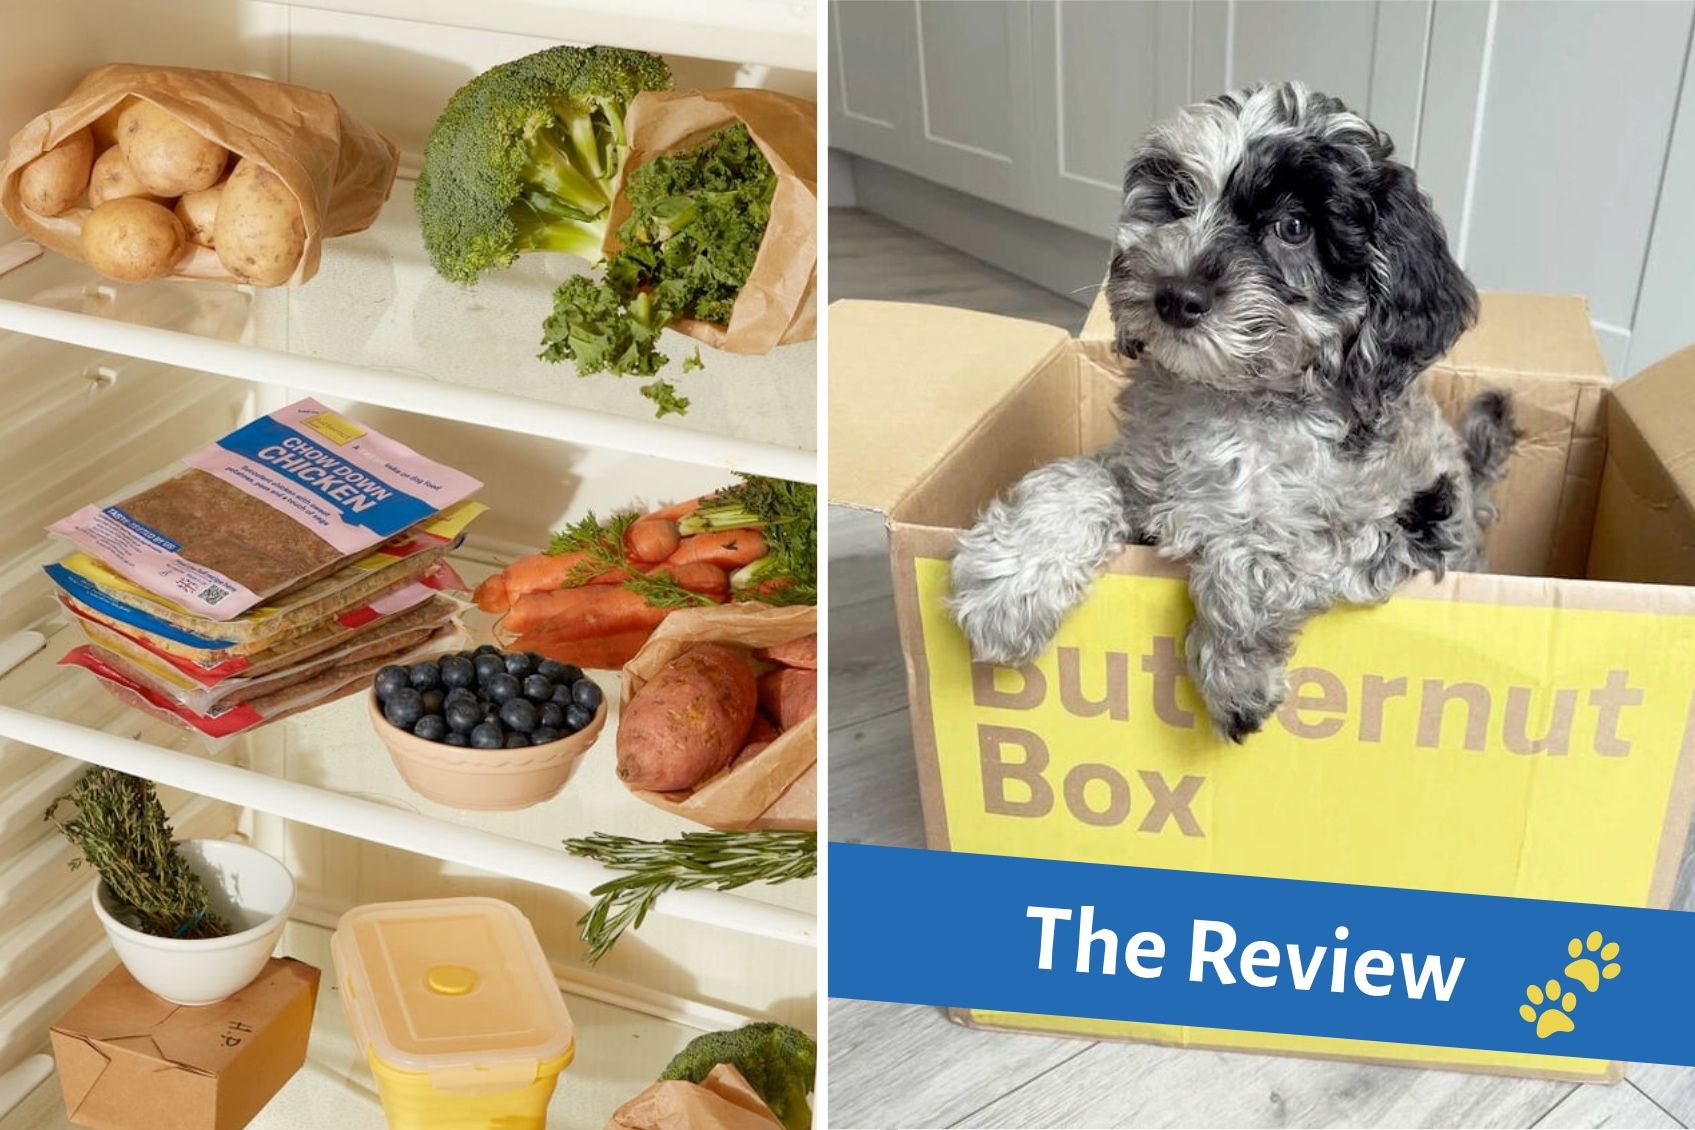 Butternut Box Dog Food Review